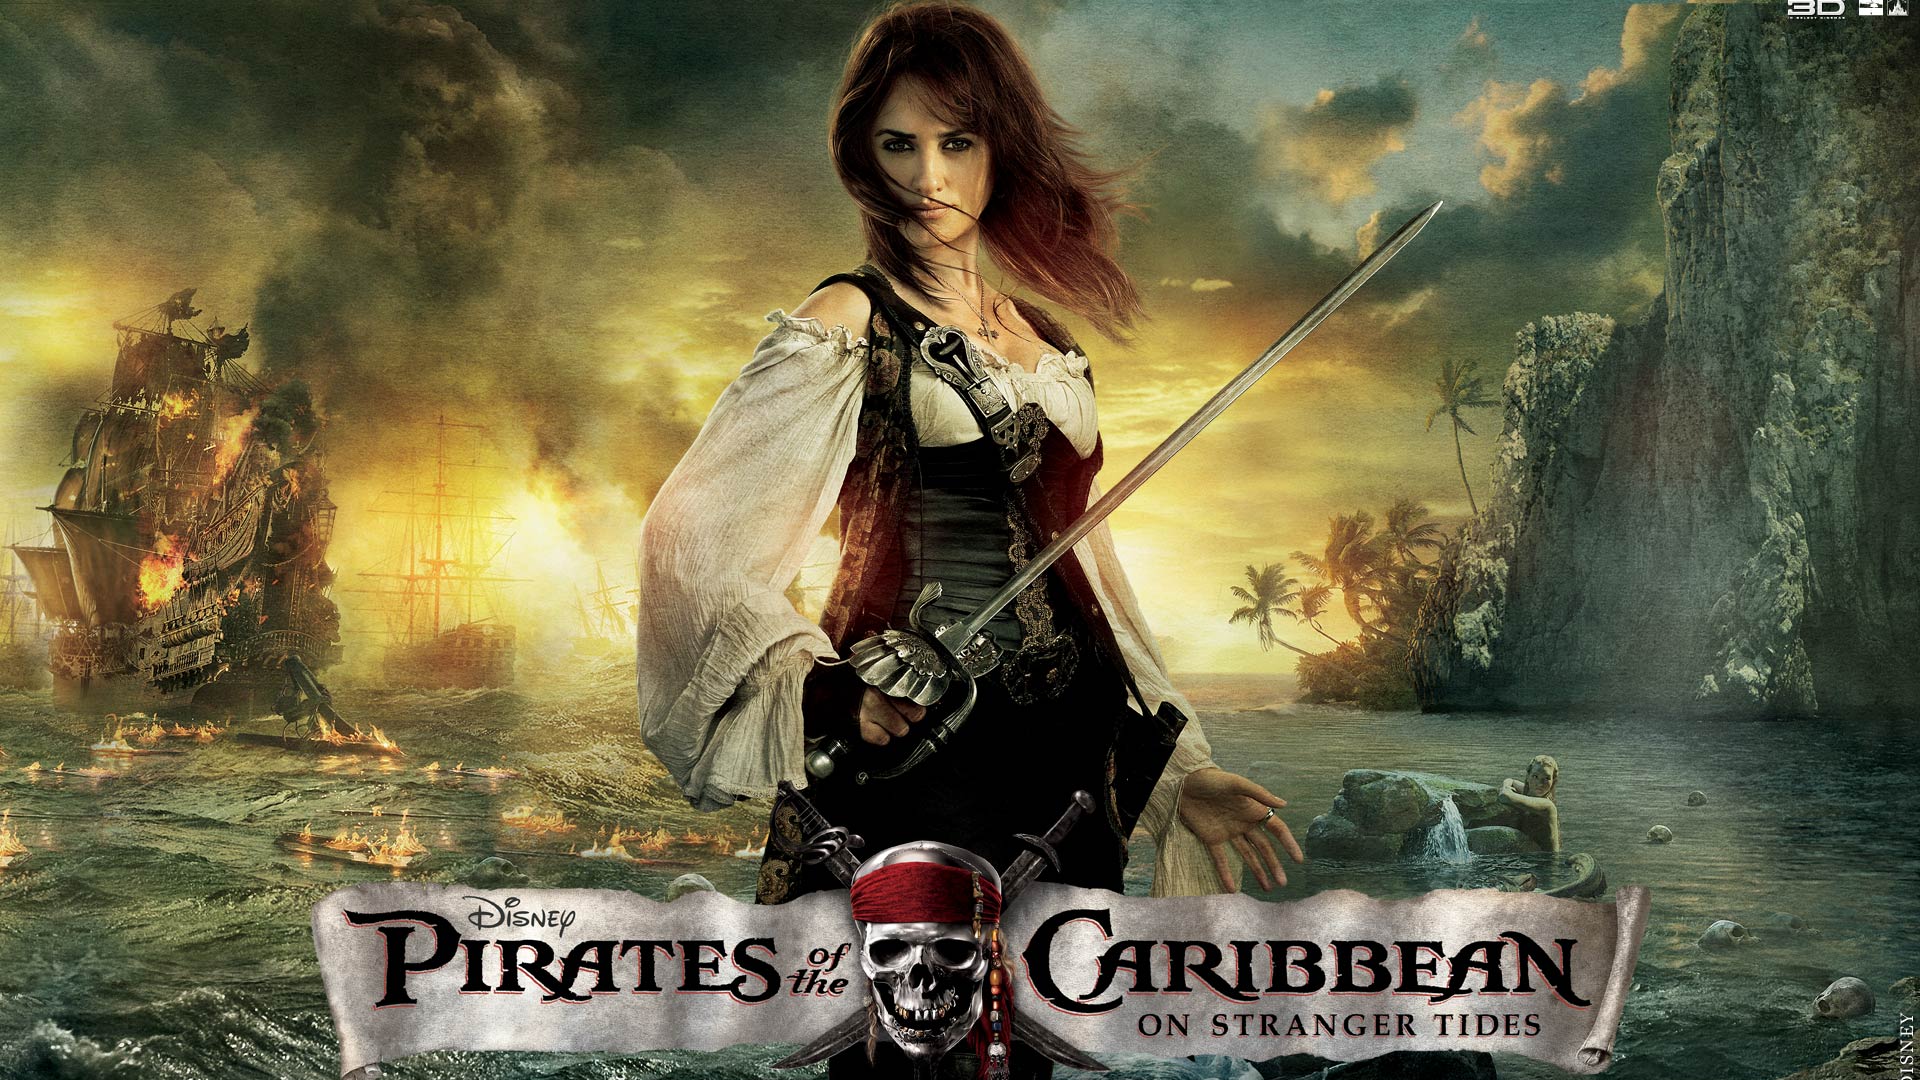 Pirates of the Caribbean - Penelope Cruz